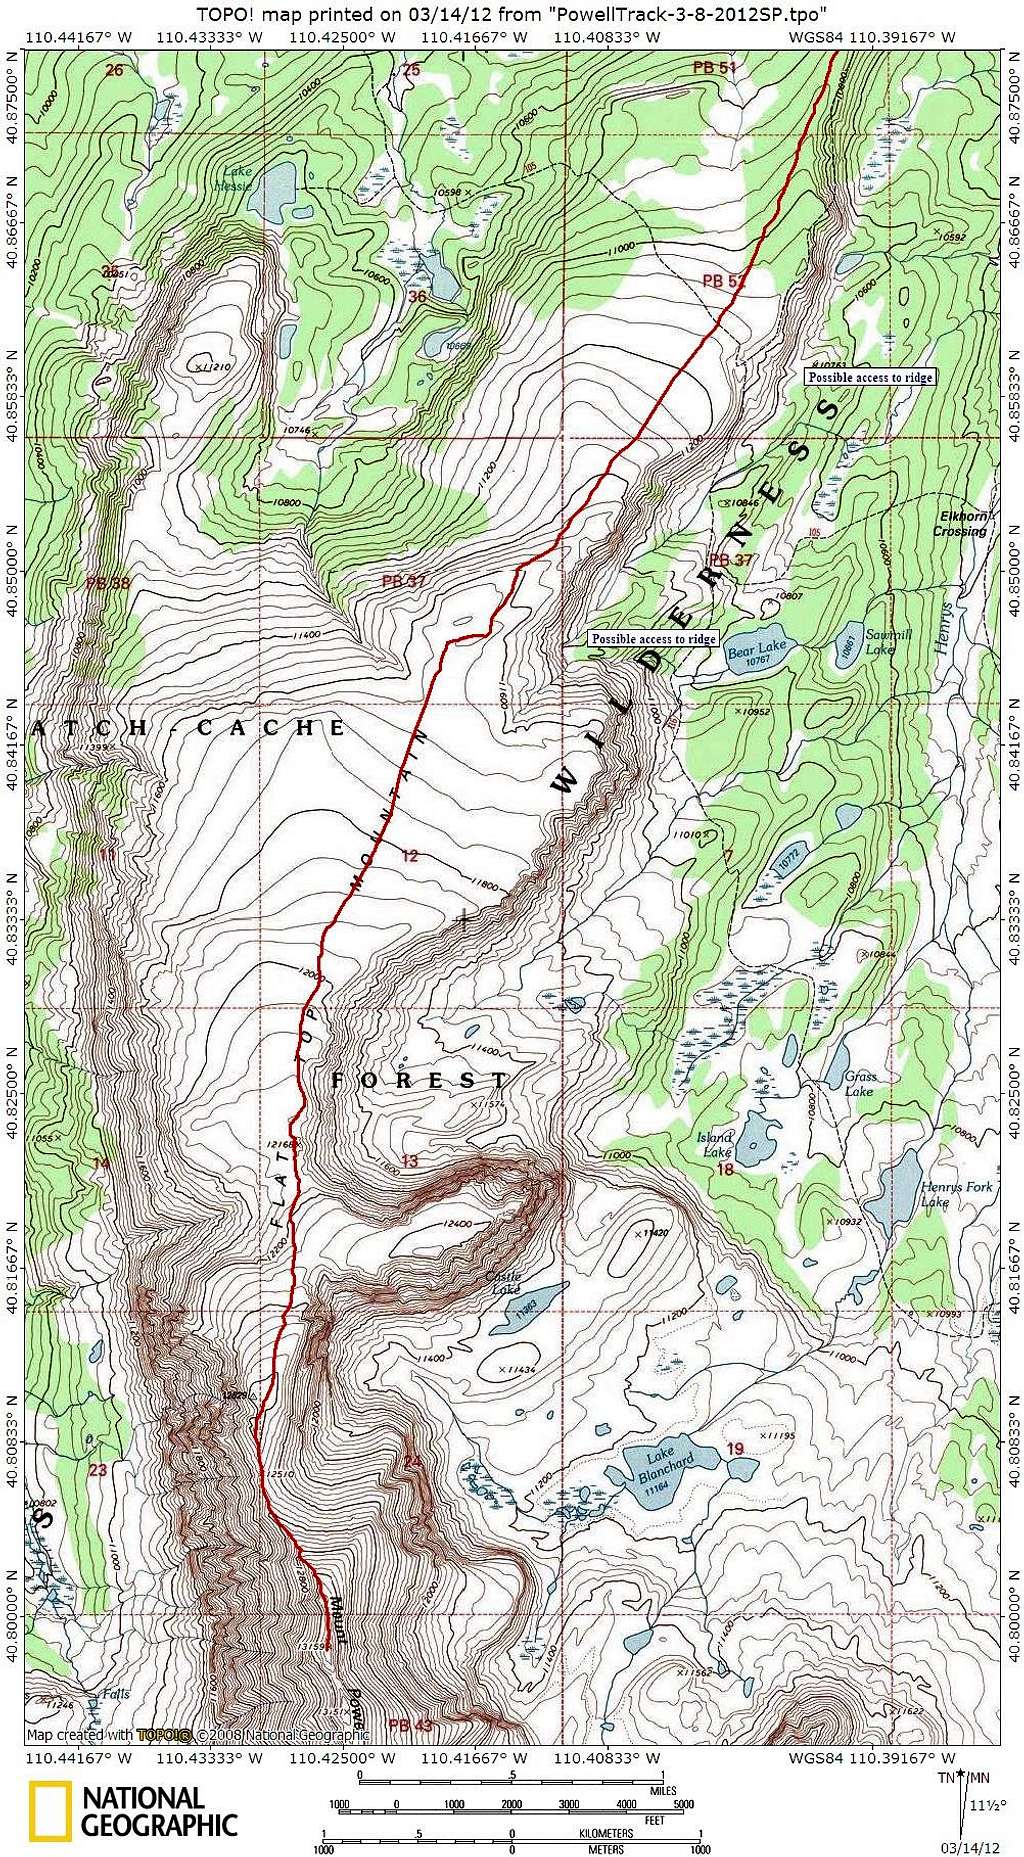 Mount Powell topo 2